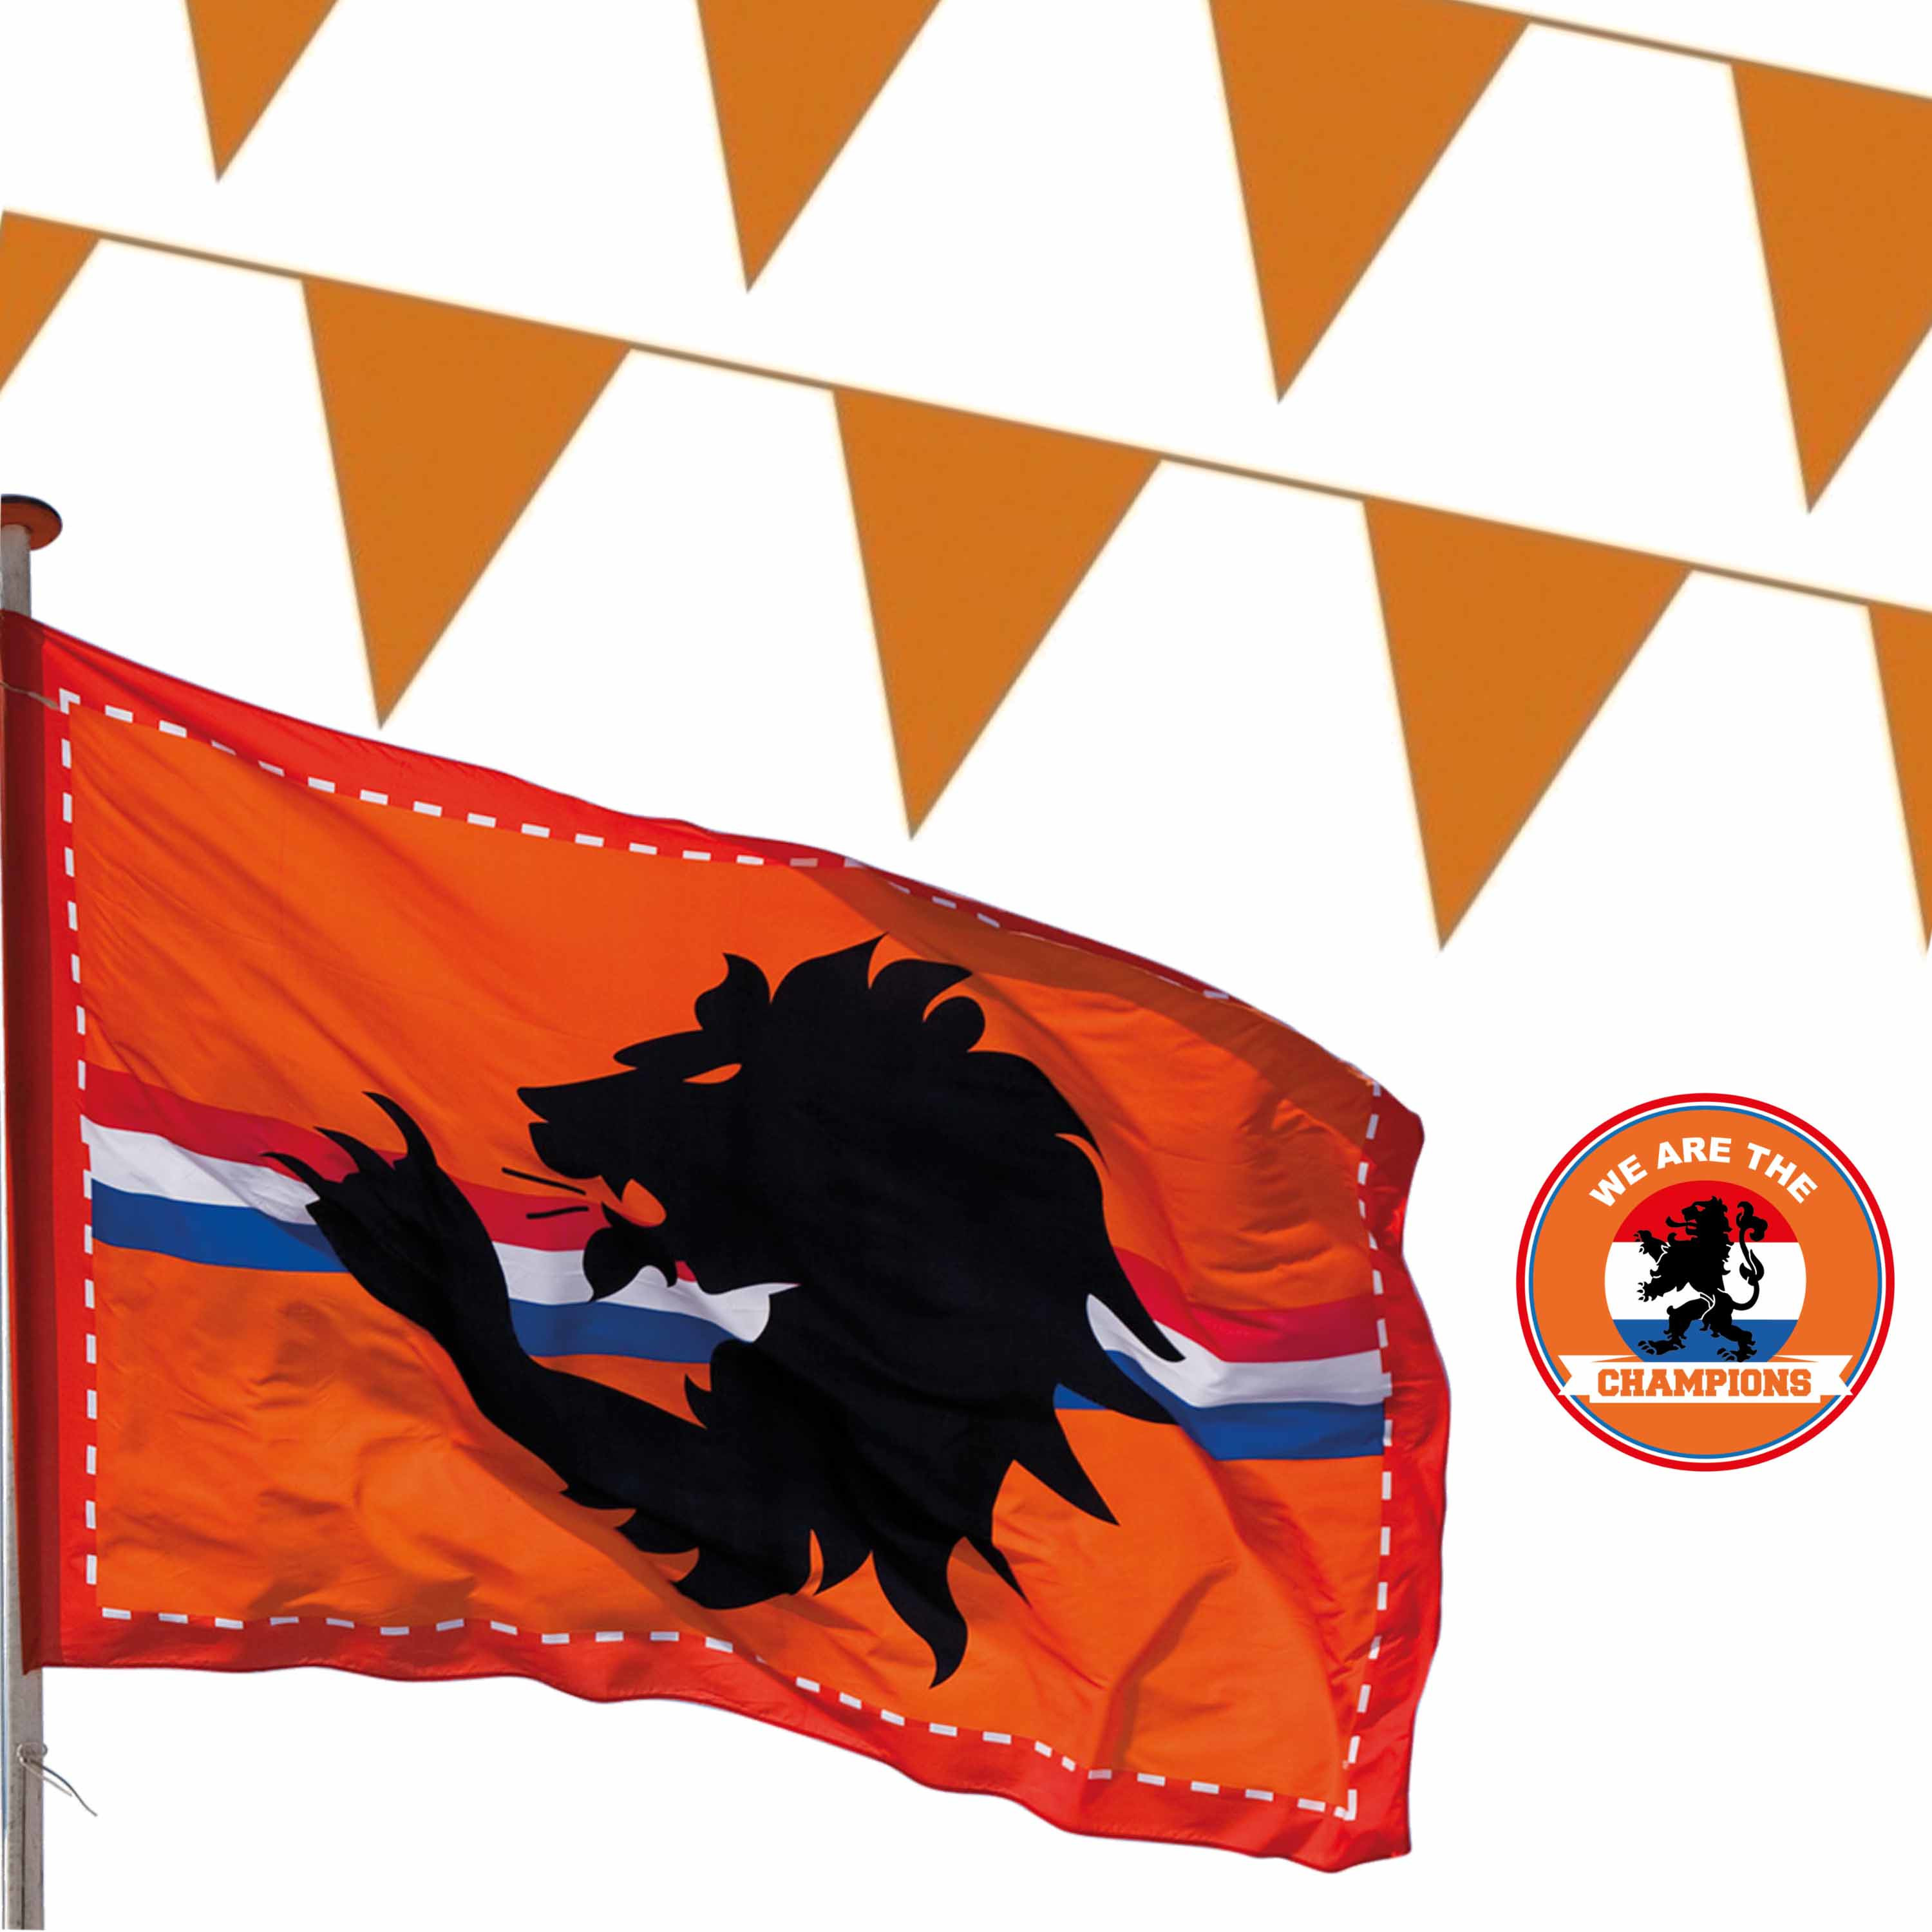 Ek oranje straat huis versiering pakket met oa 2x Mega Holland vlag, 100 meter oranje vlaggenlijnen